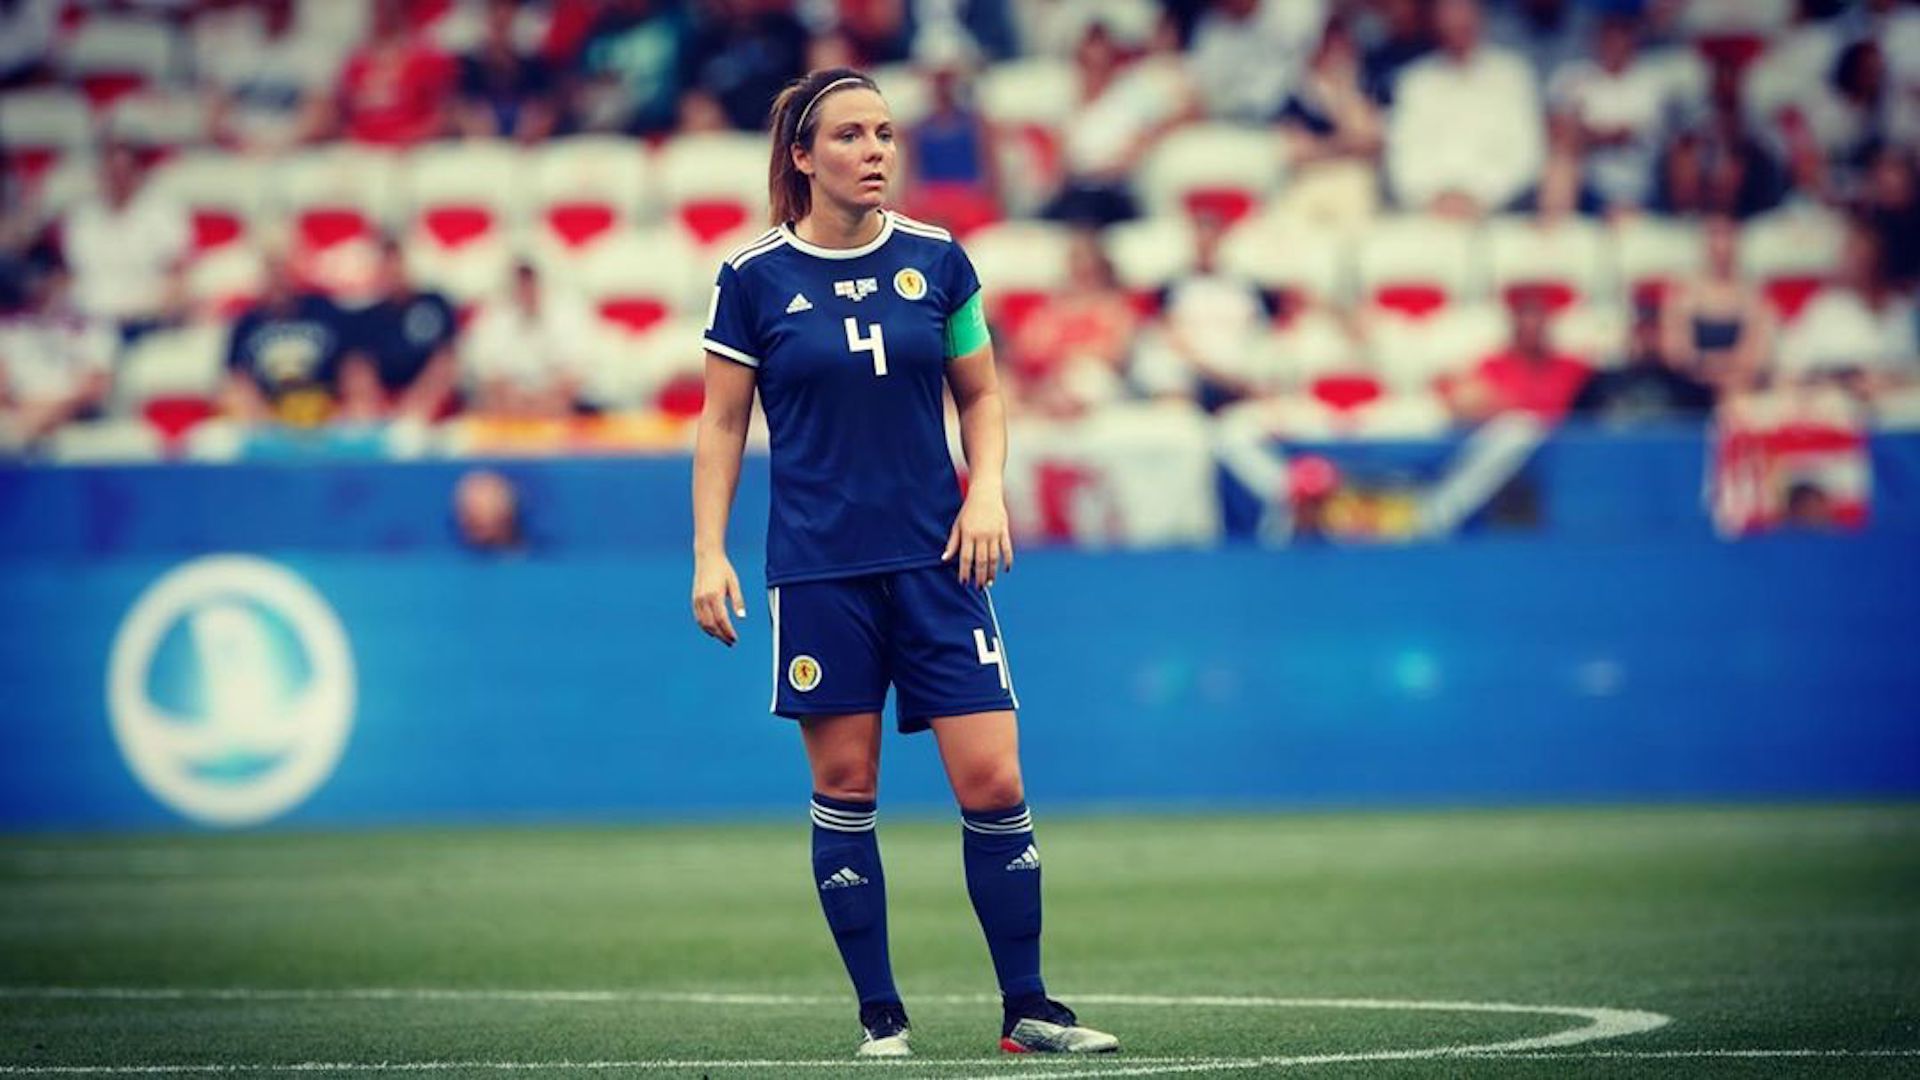 Scottish women's football team captain